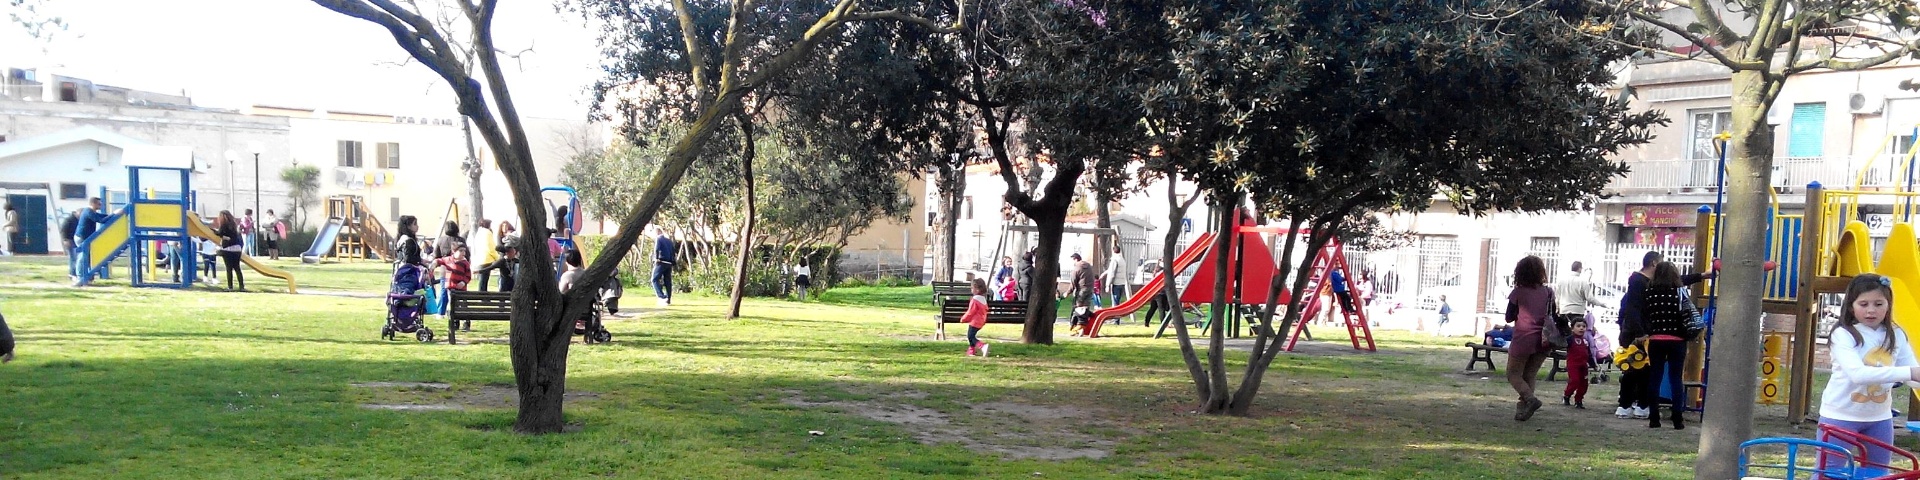 Parco San Gavino